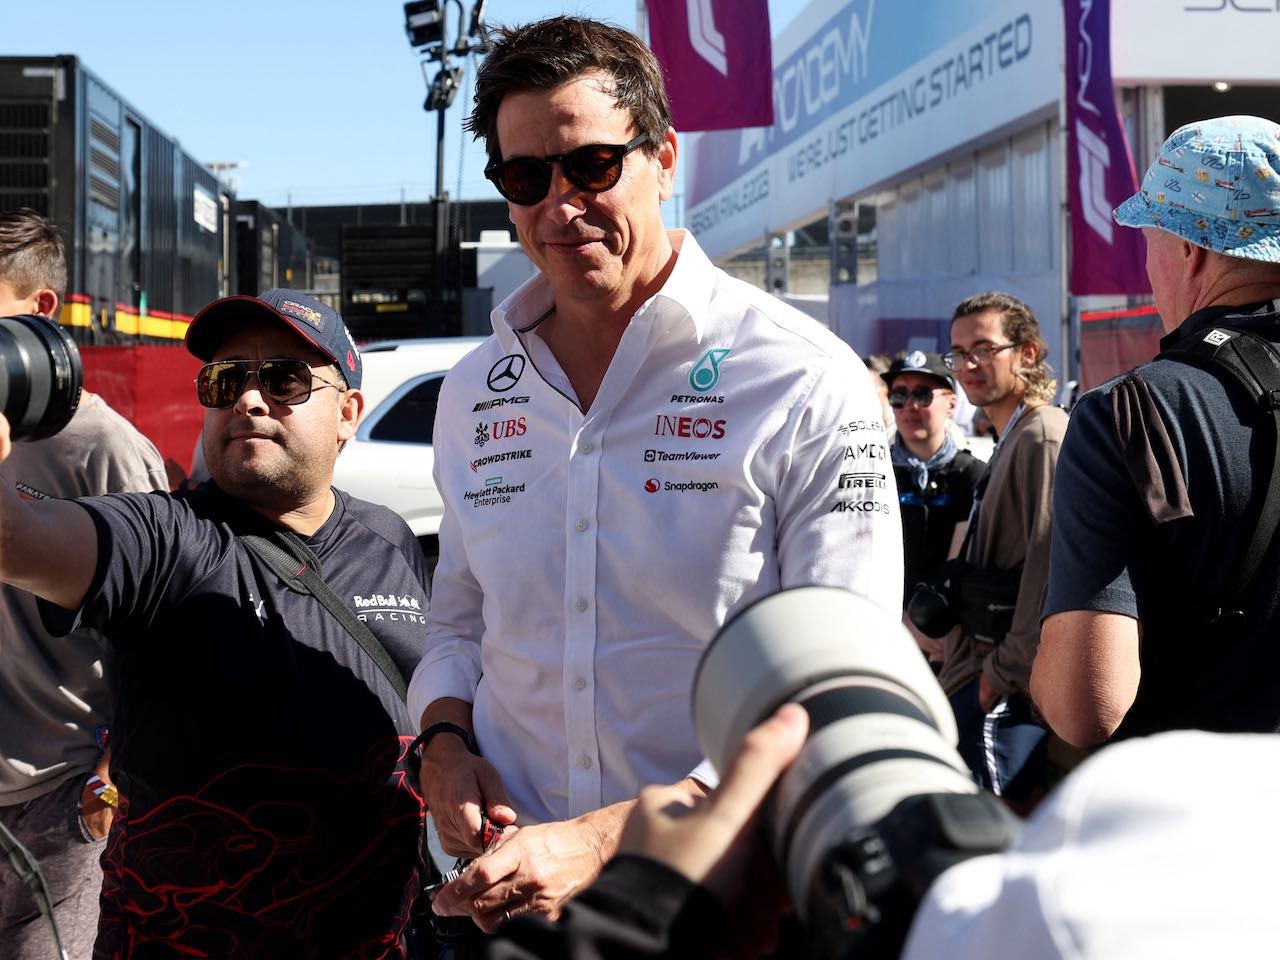 Mercedes installs casino ban for Las Vegas GP week